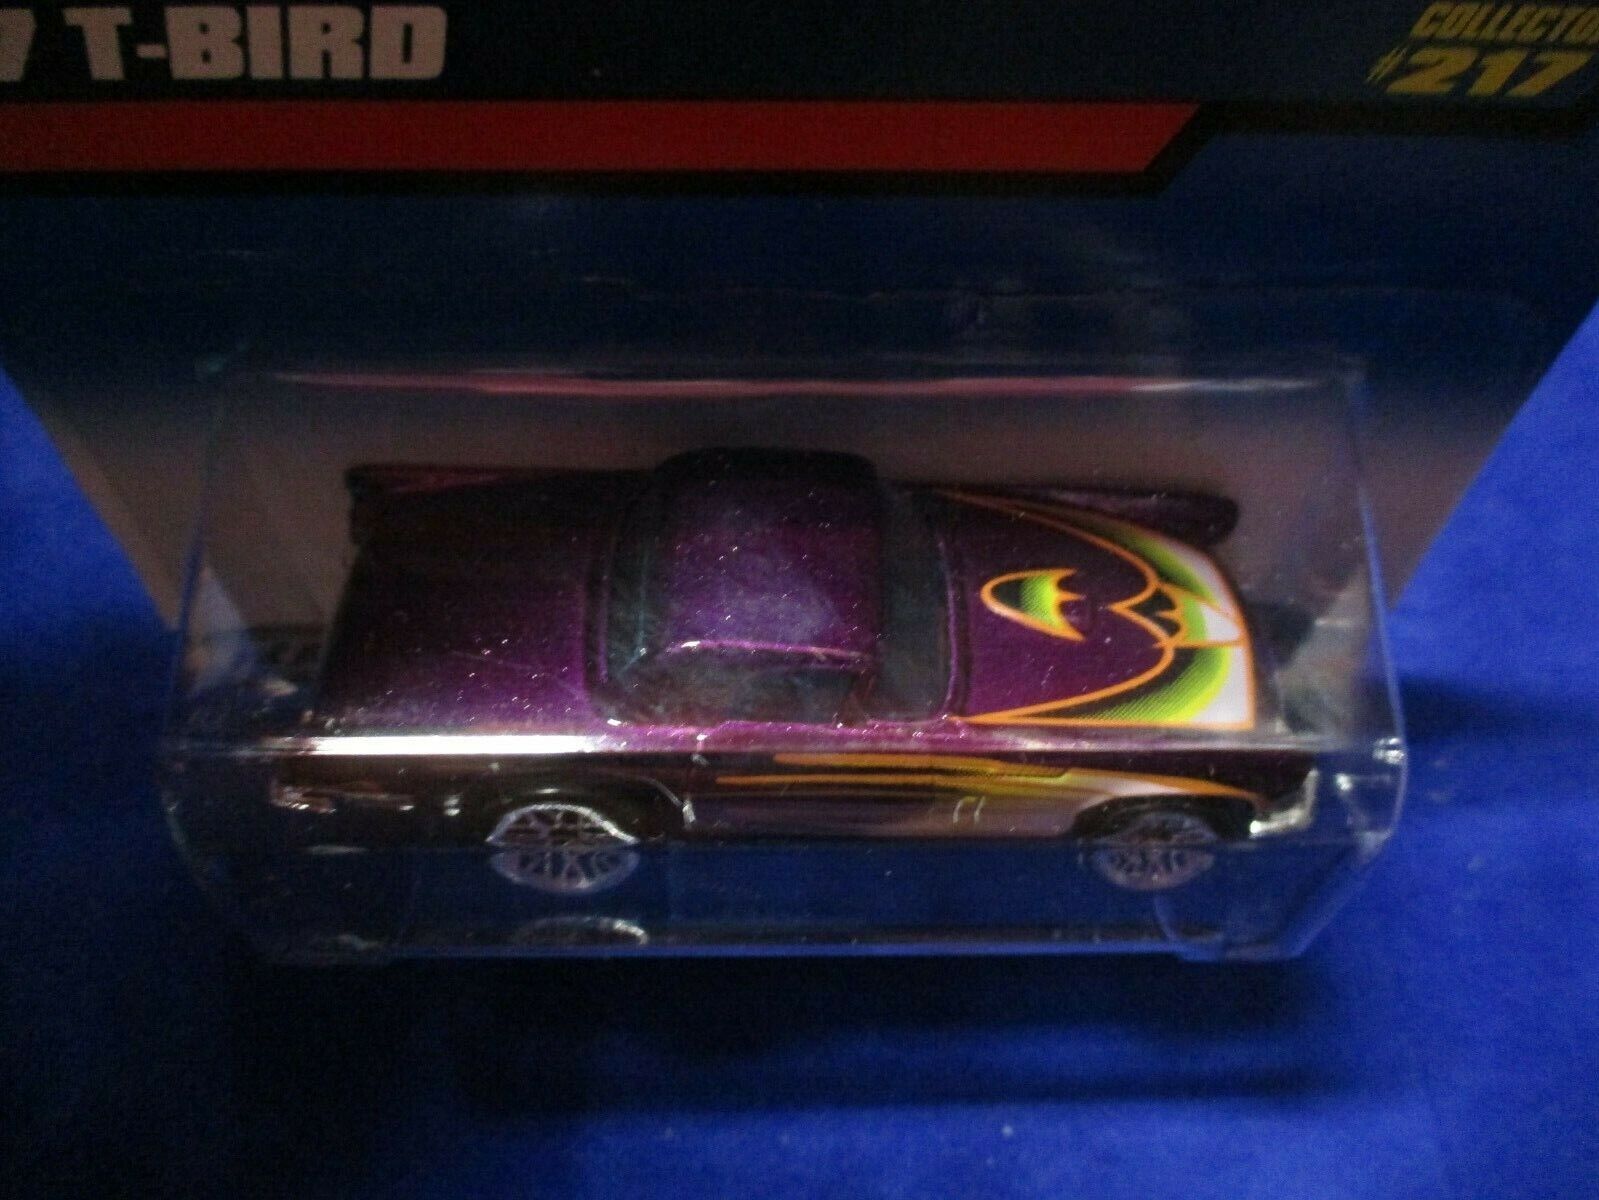 Hot Wheels Mattel Wheels '57 T-Bird 2000 Collector 217 Purple